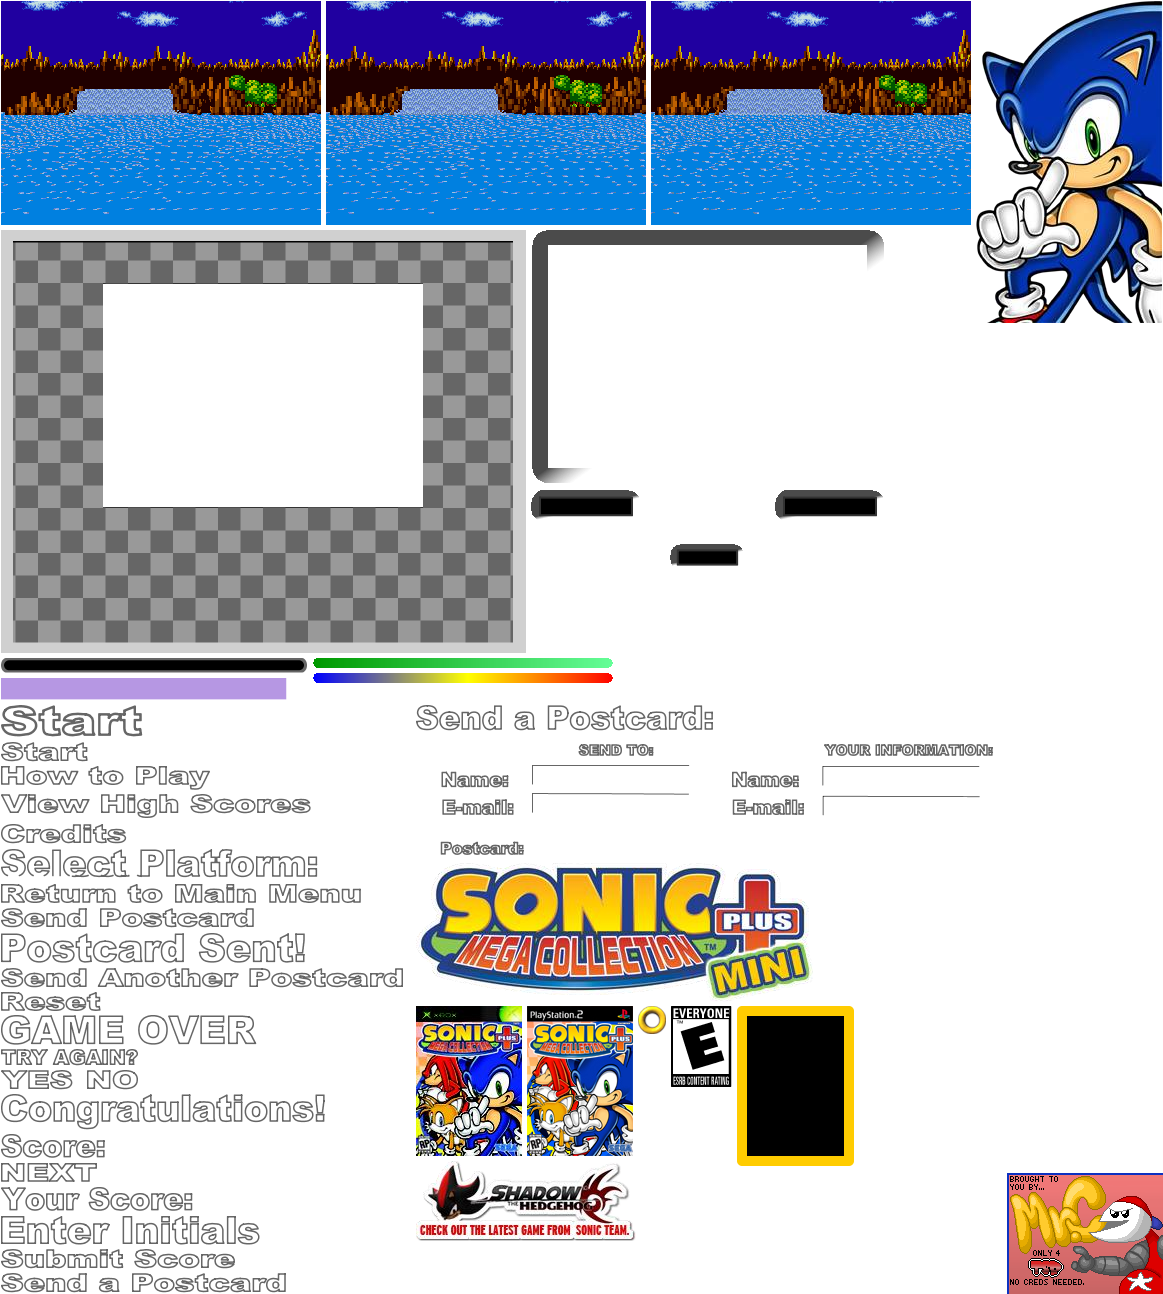 Sonic Mega Collection Plus Mini - Main Menu